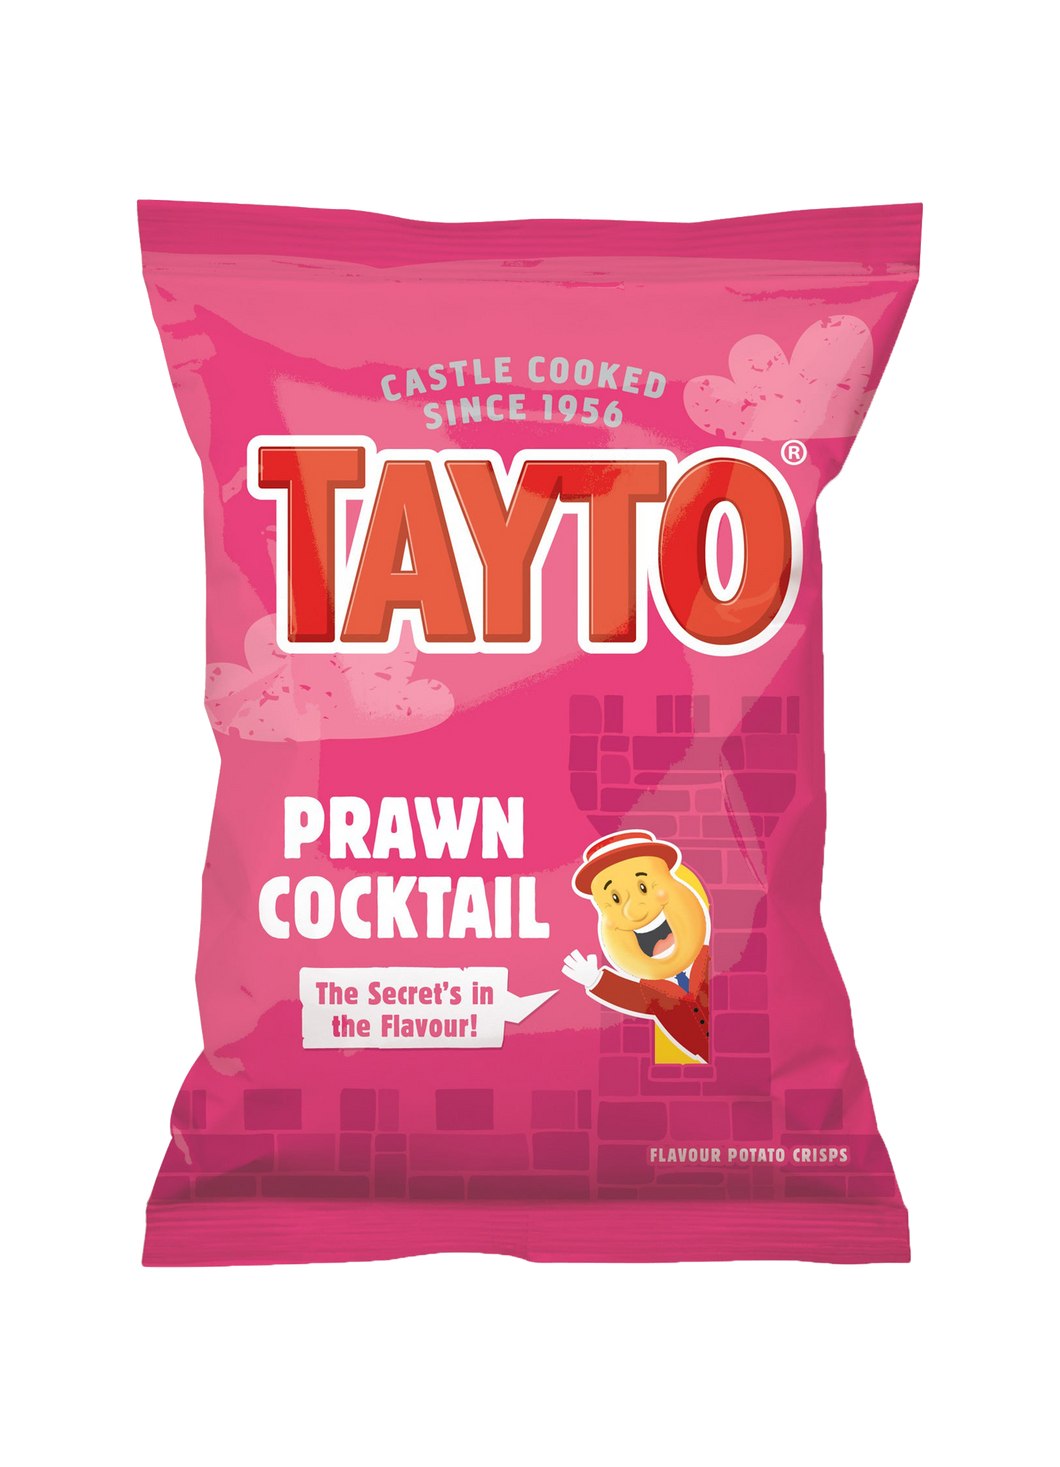 Tayto Prawn Cocktail (37g)